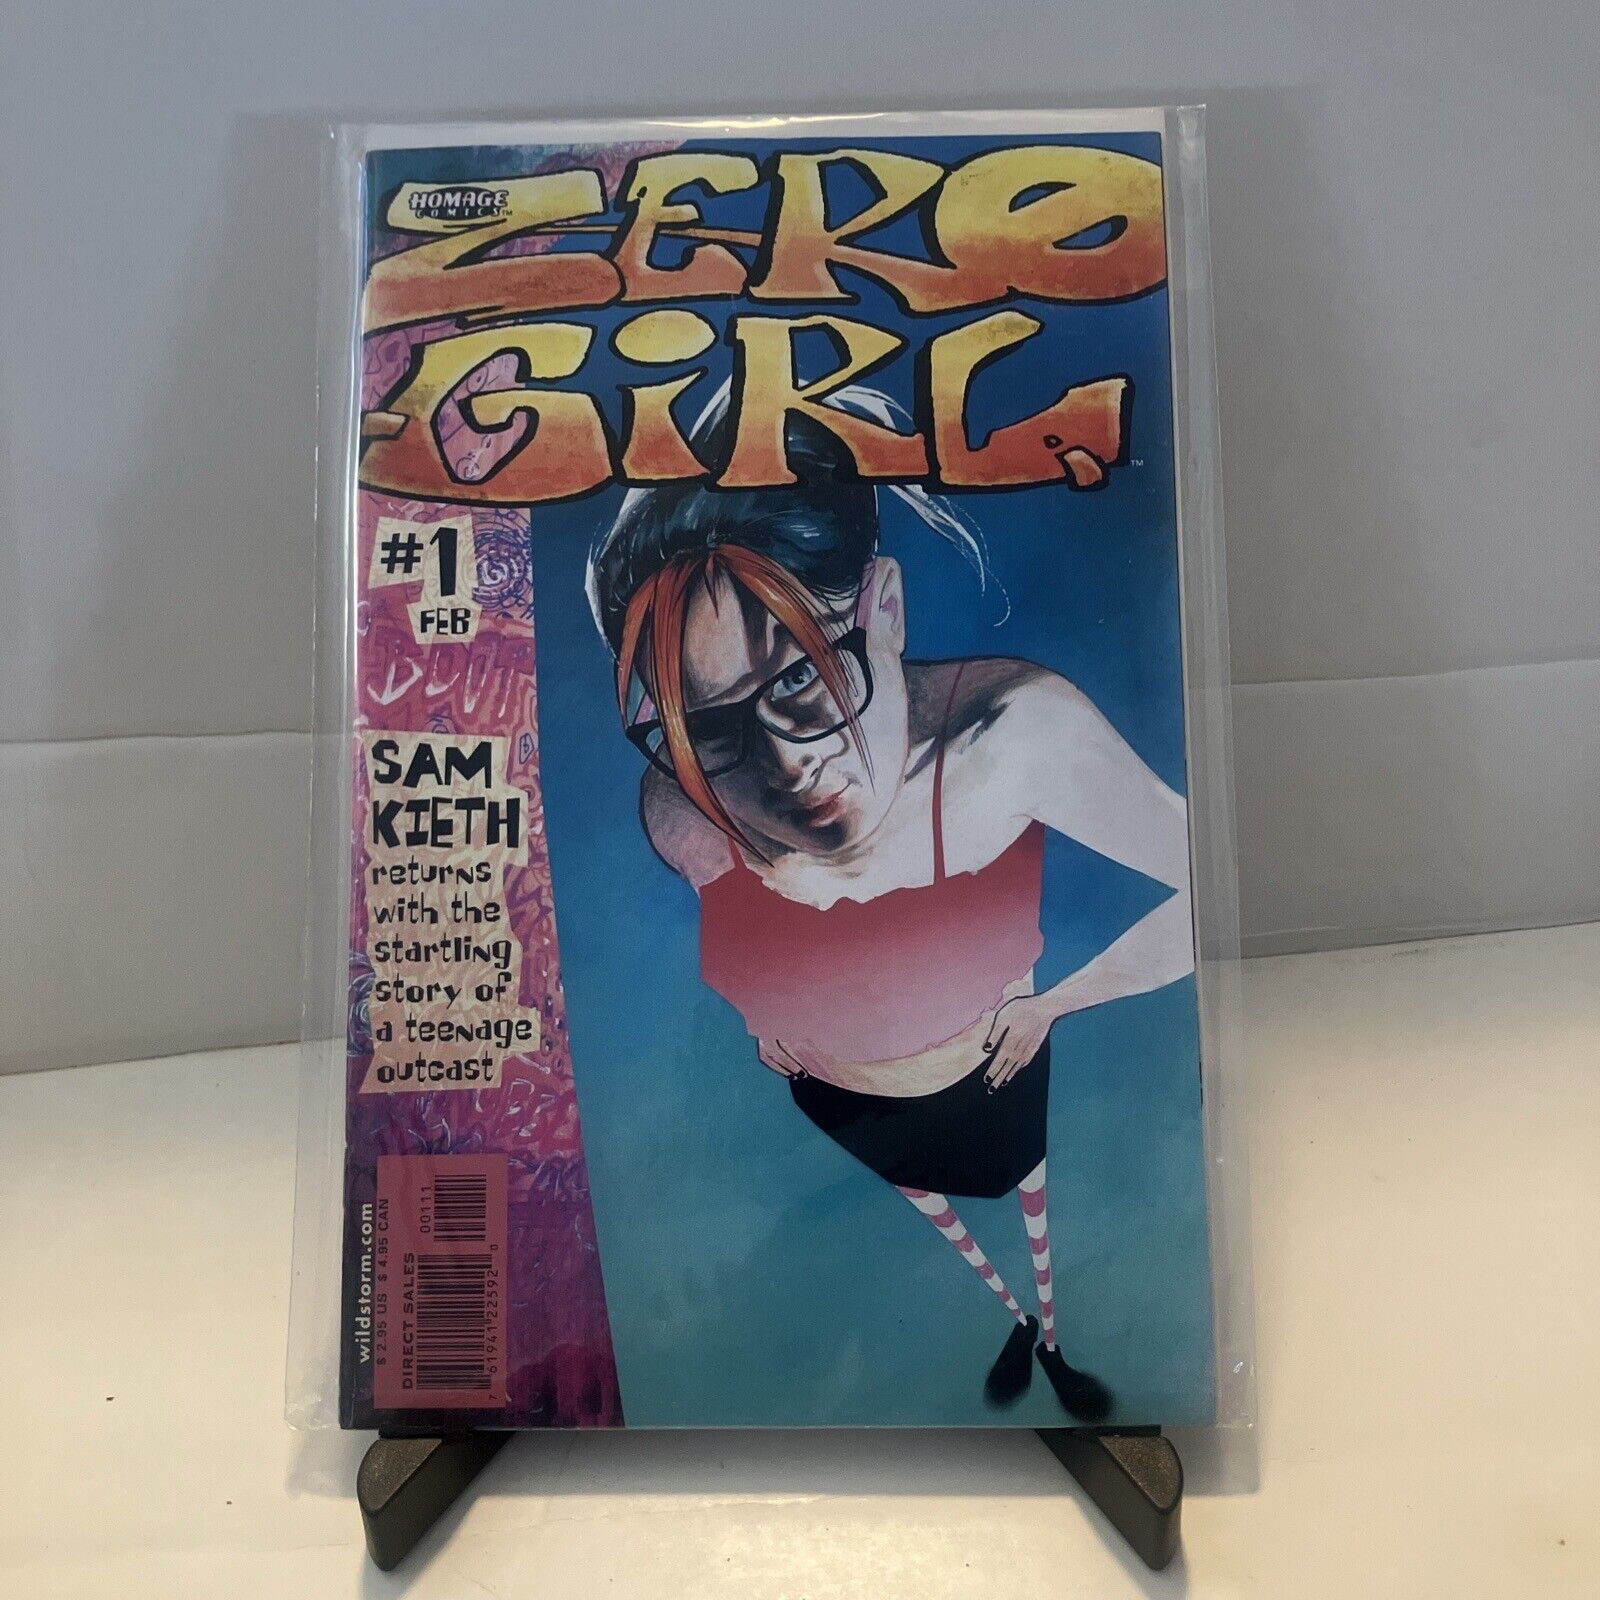 Zero Girl #1 (DC Comics, February 2001)